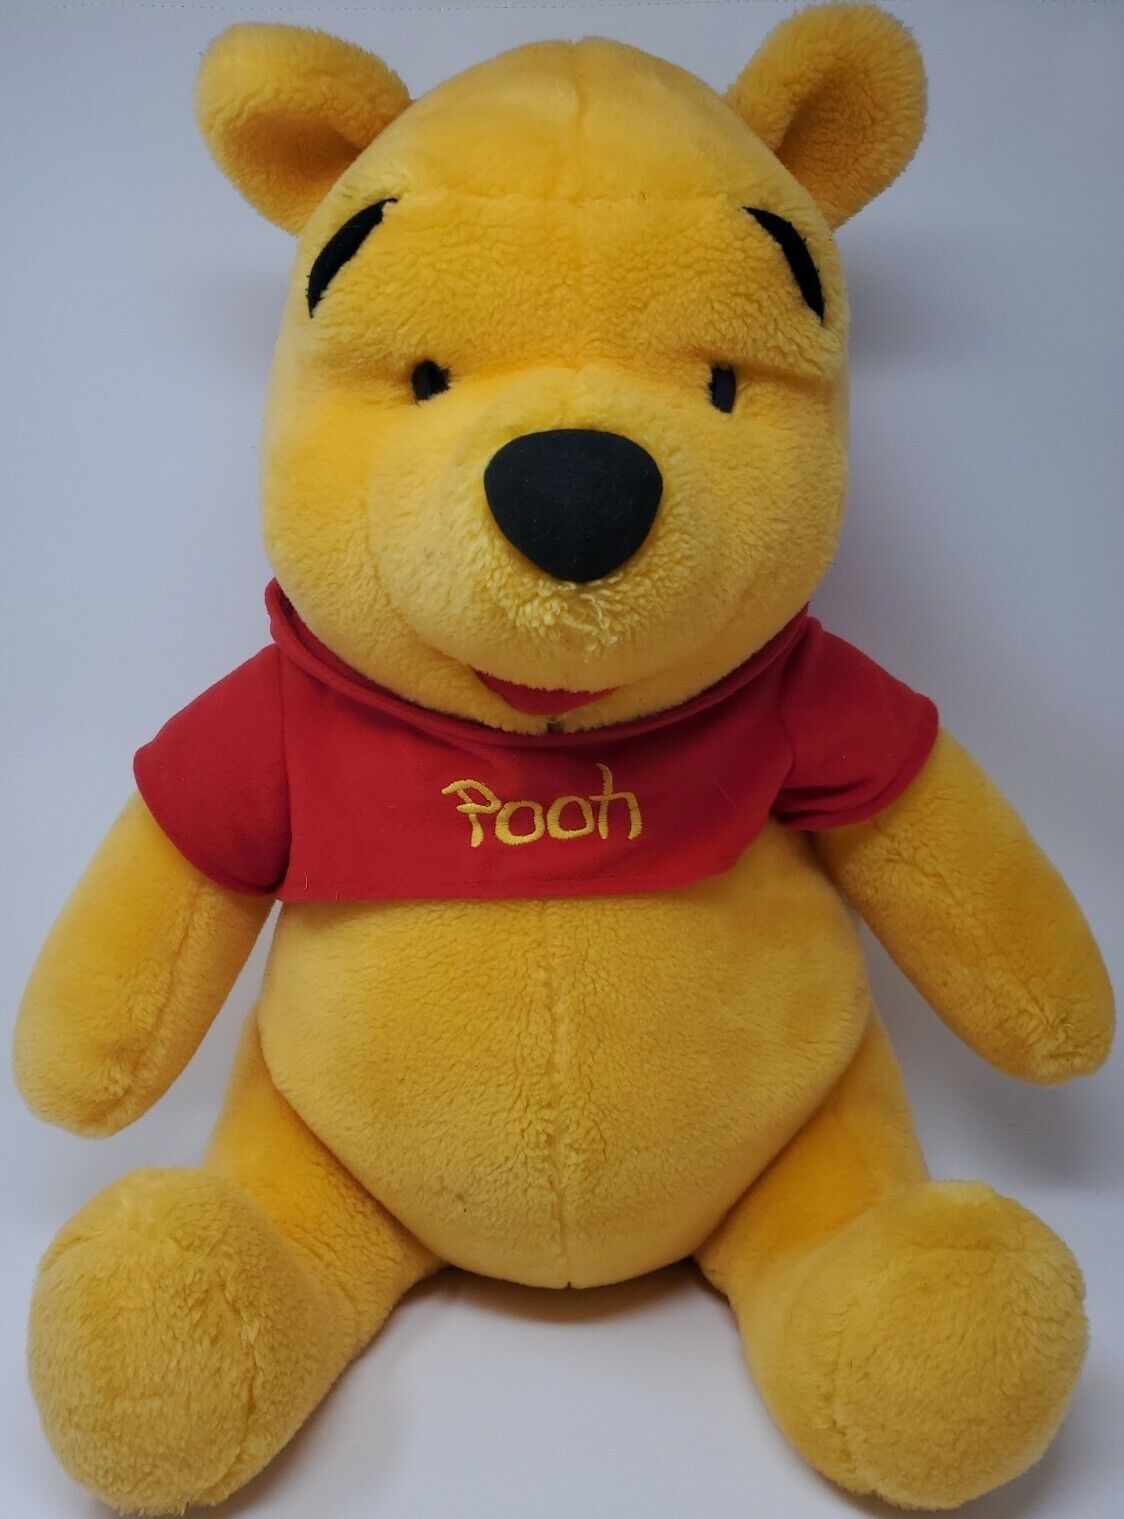 Winnie The Pooh Stuffed Animals: A Plush Journey to Imagination post thumbnail image